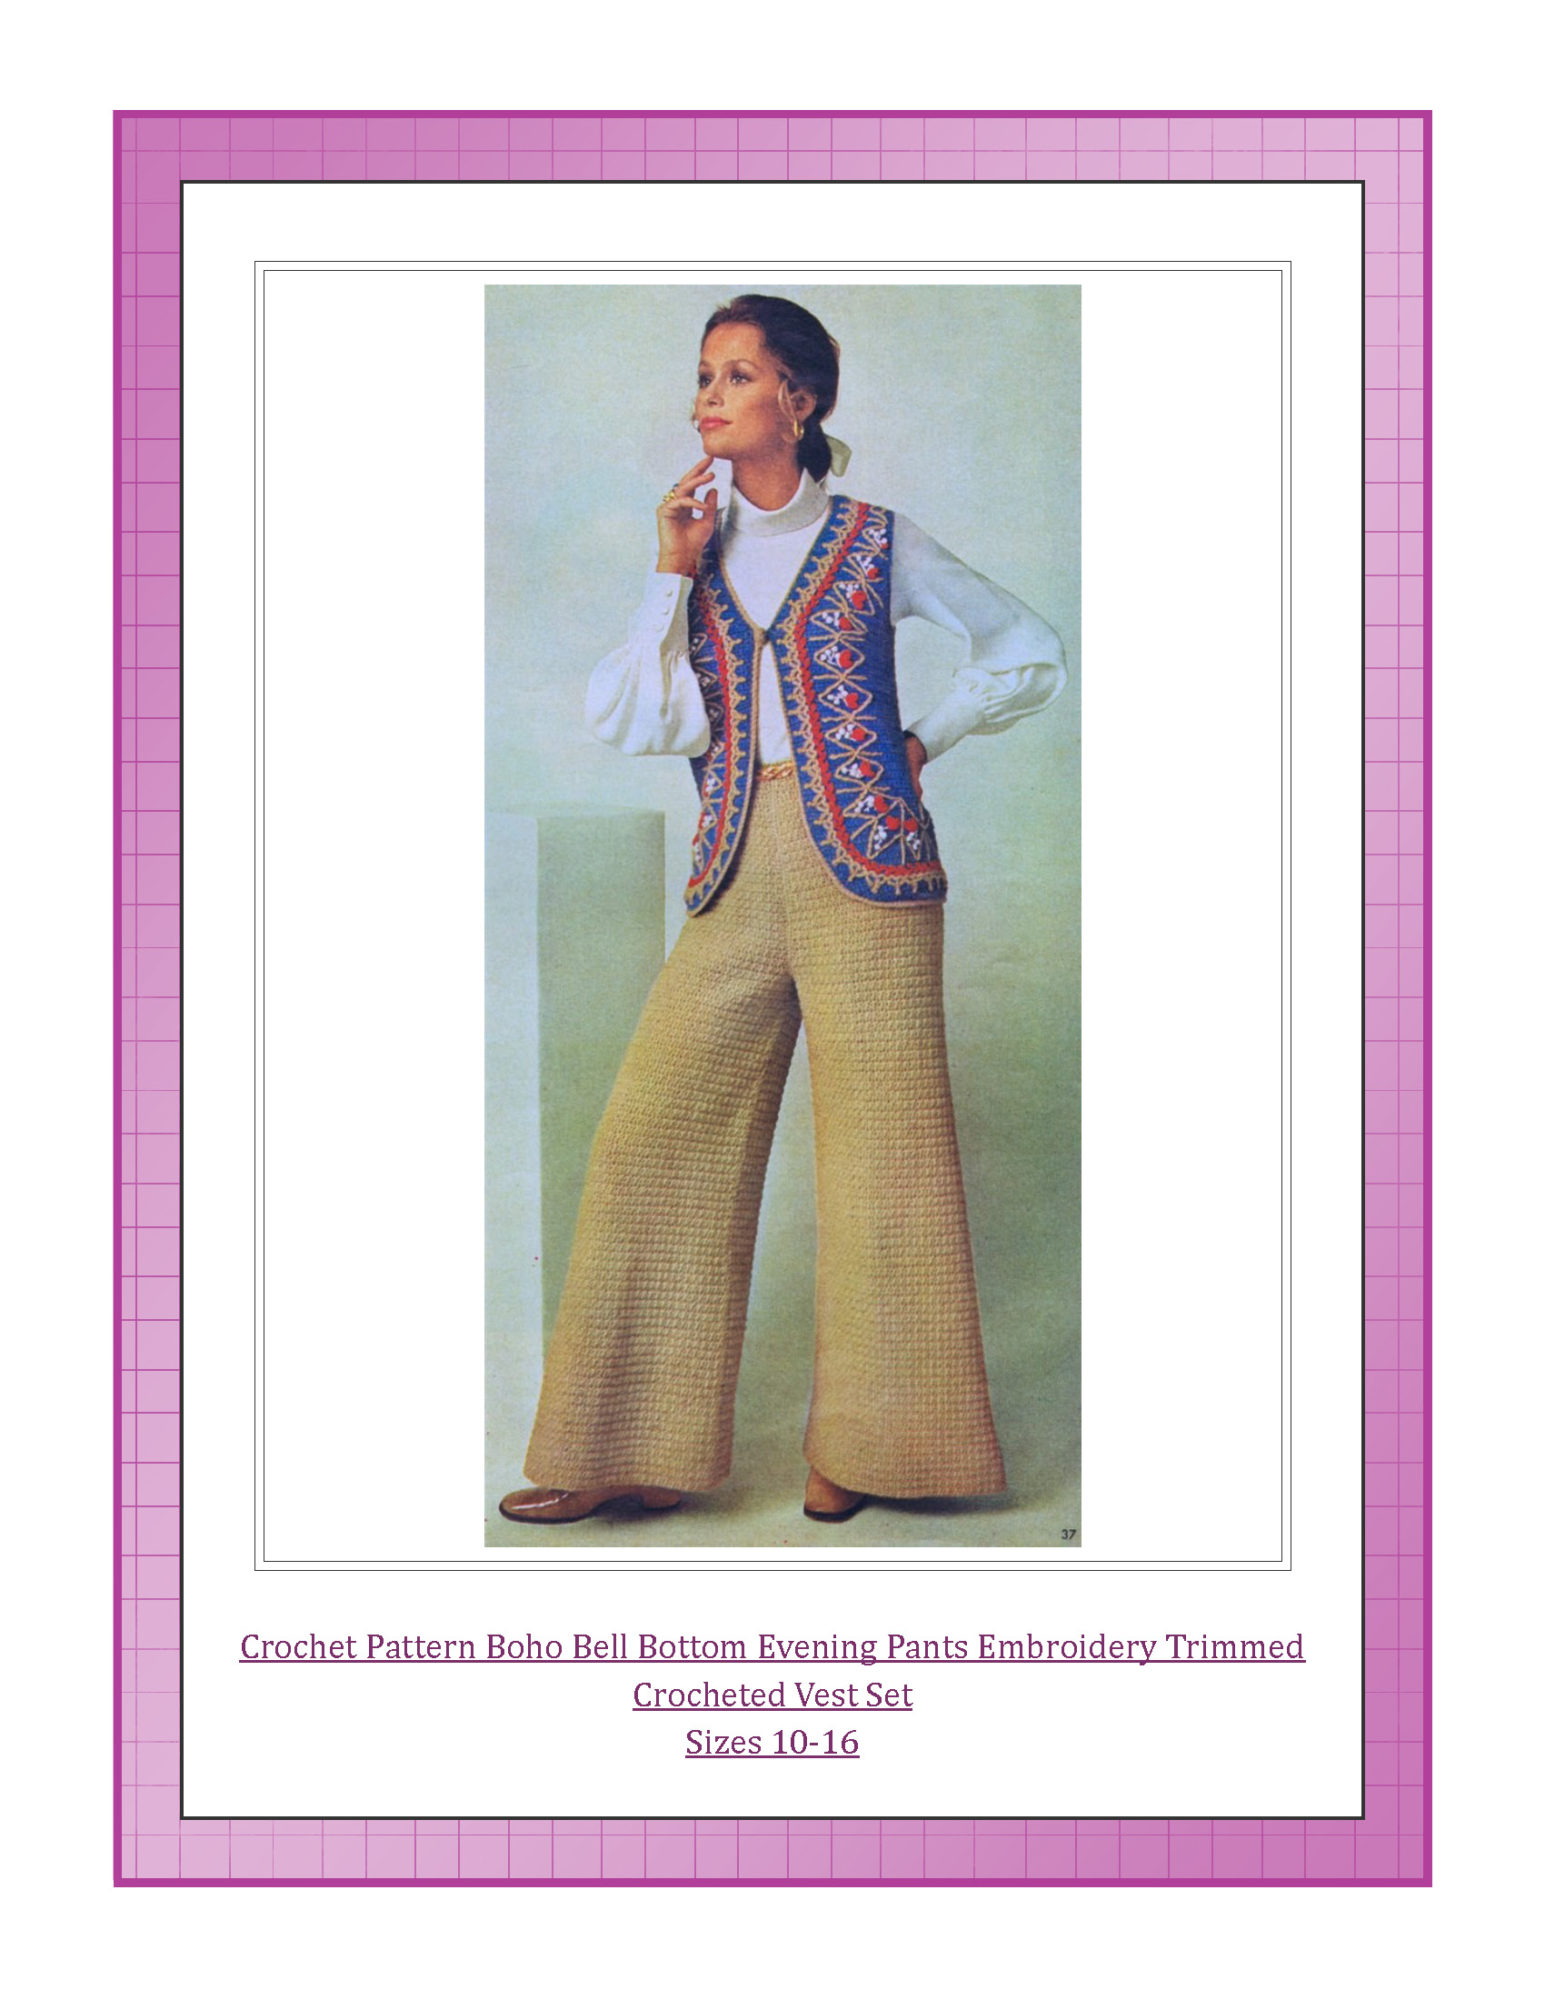 Crochet Pattern Boho Bell Bottom Evening Pants Embroidery Trimmed Crocheted Vest Set Sizes 10-16